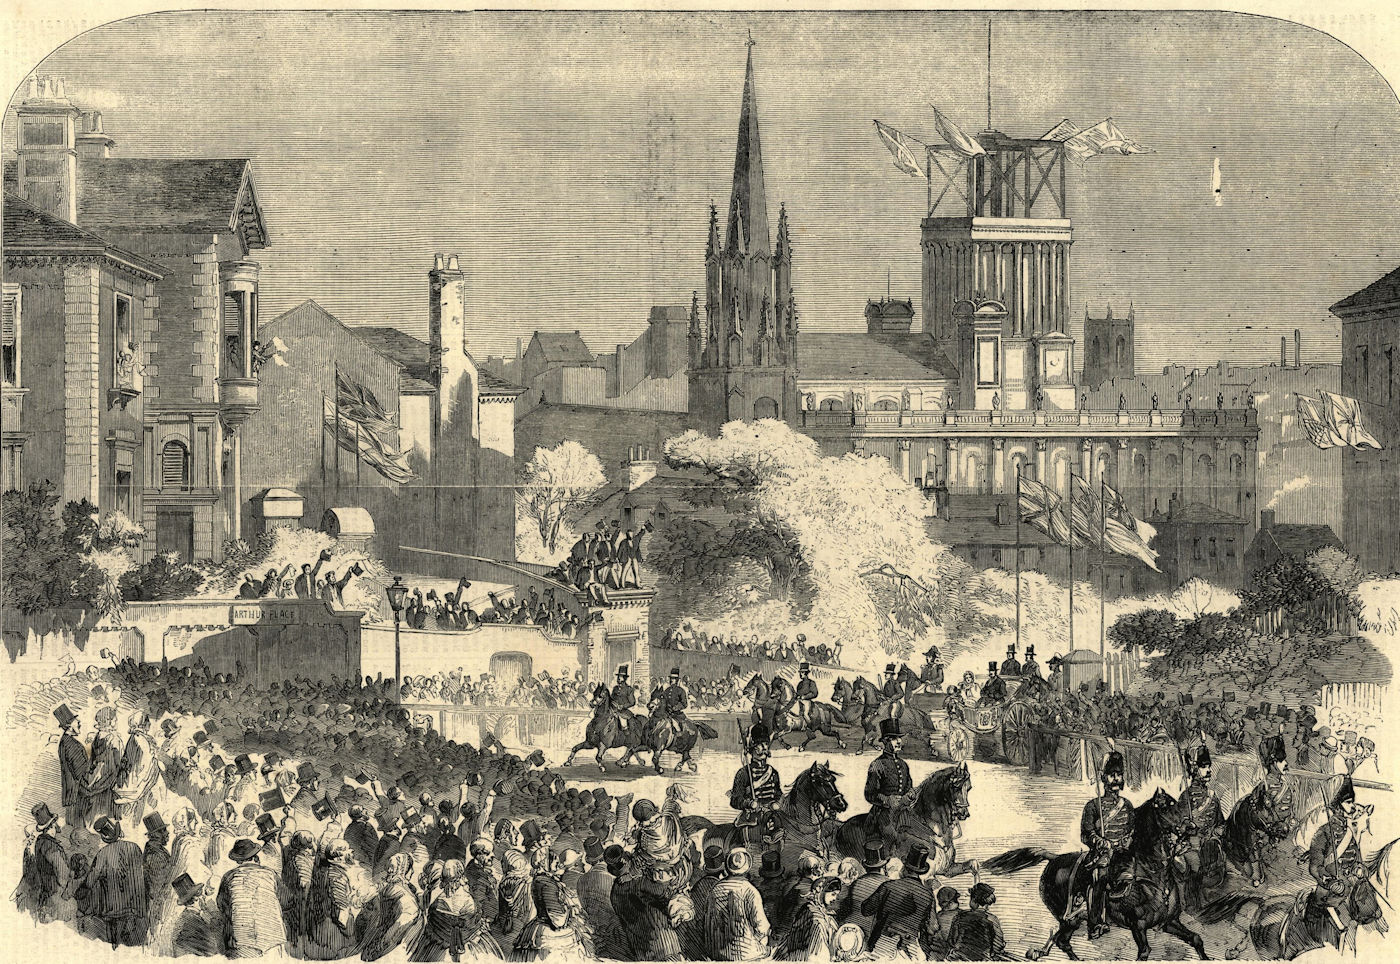 Queen Victoria passing through Clarendon Road, Leeds. Yorkshire 1858 ILN print